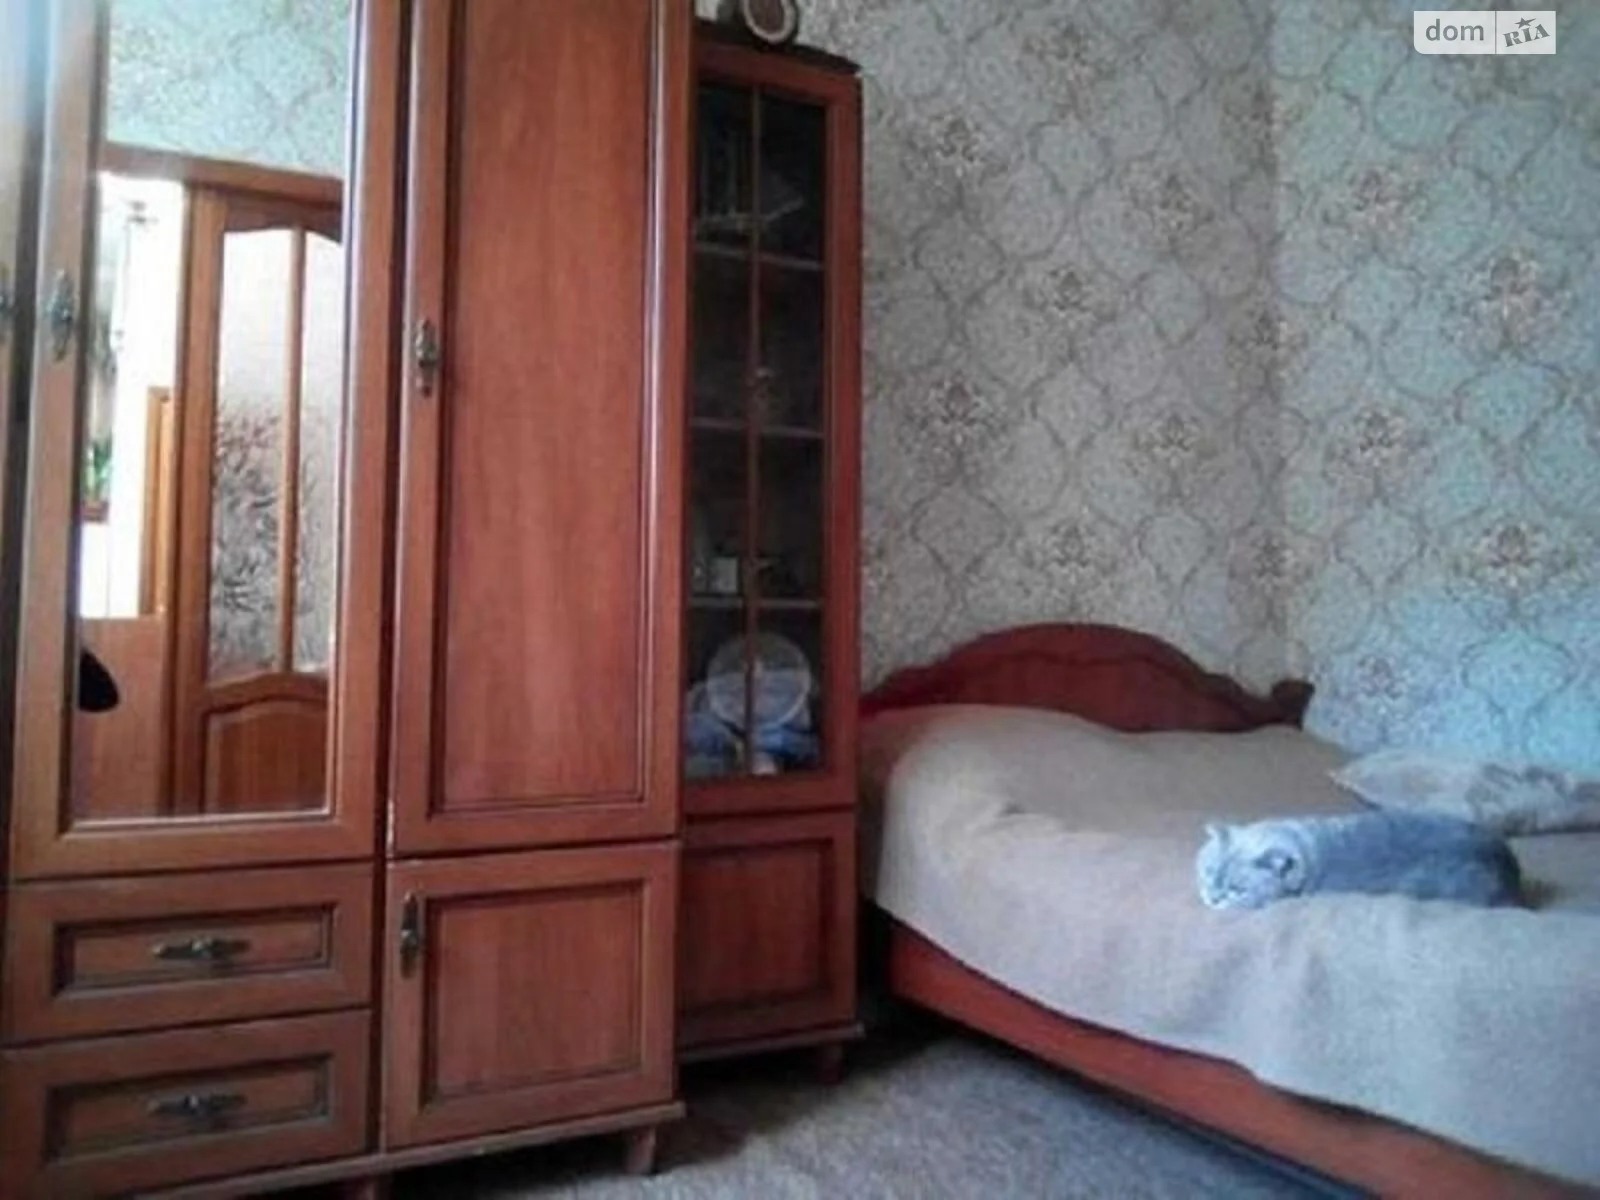 Продается комната 30 кв. м в Одессе, цена: 33000 $ - фото 1